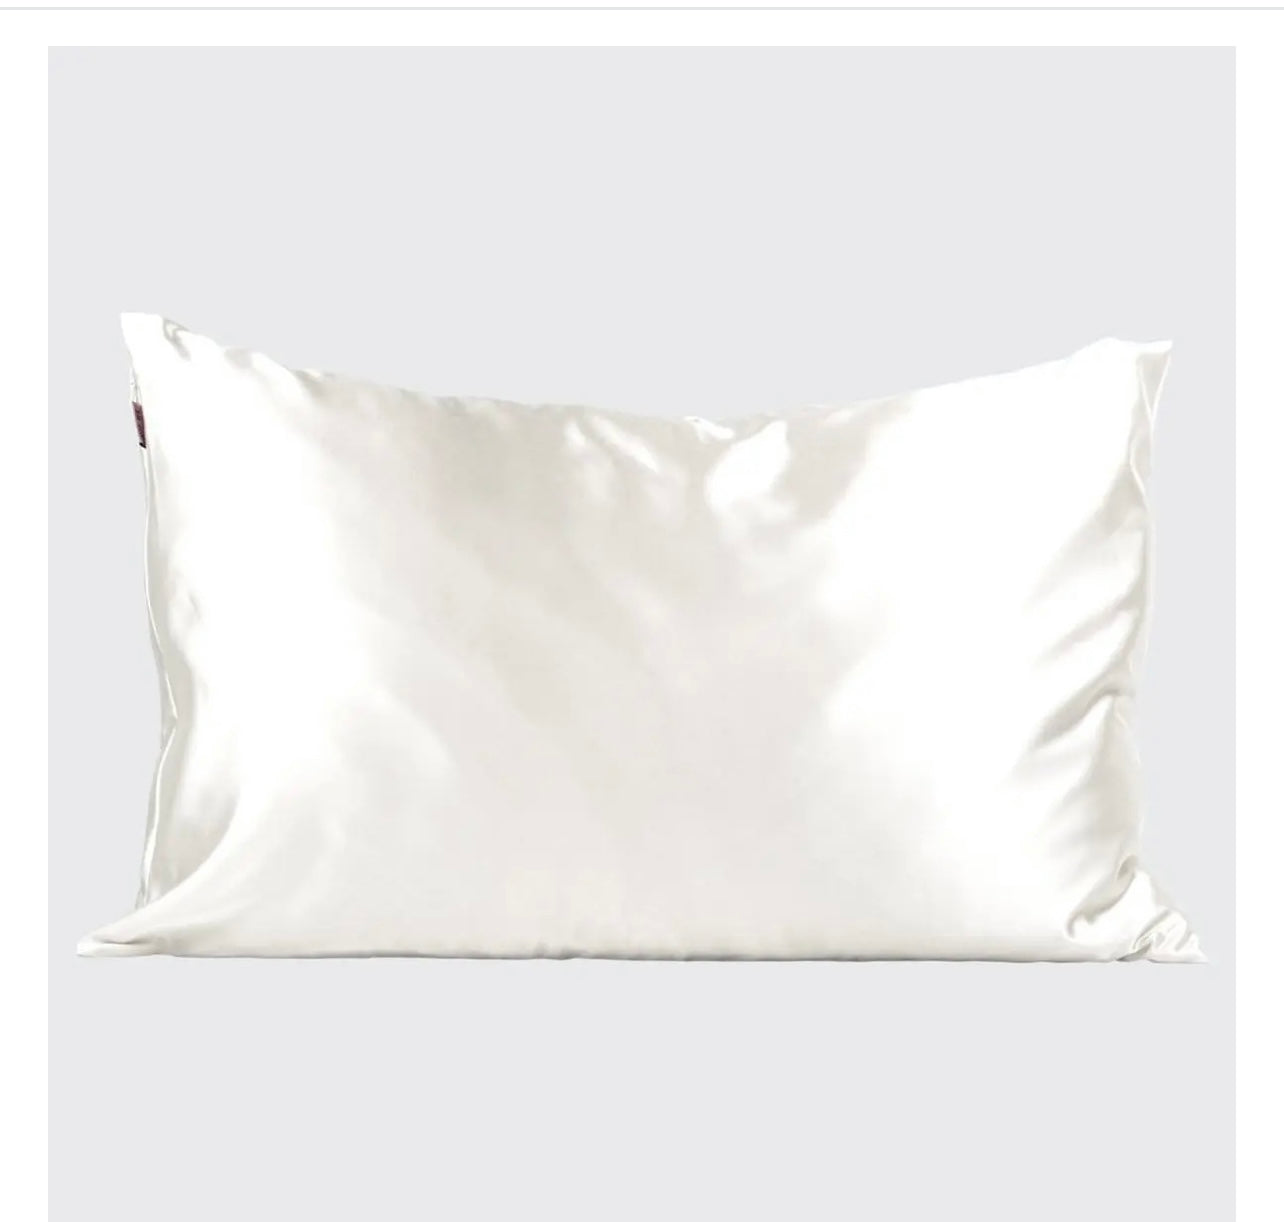 Kit-sch satin pillowcase